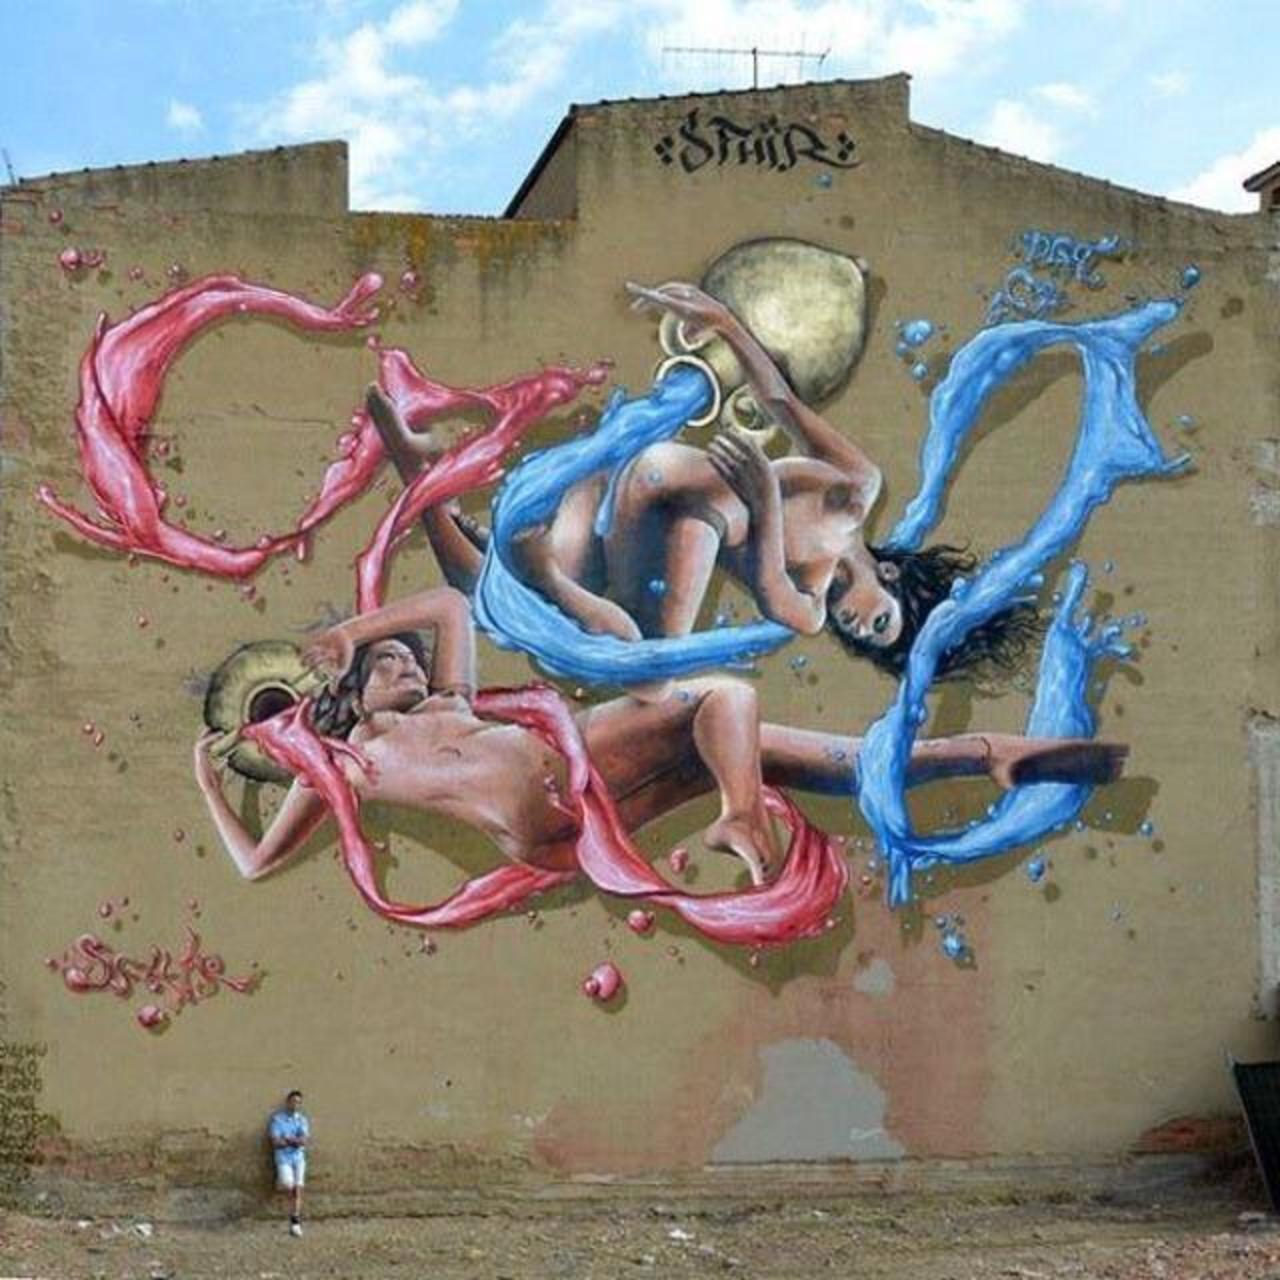 RT @brunokeyser: “@weigeltw: Work by SFHIR

#SFHIR #graffiti #streetart #murals #art #spraypaint http://instagram.com/p/sevEdpxvFP/ http://t.co/eJOwbuZwdh”